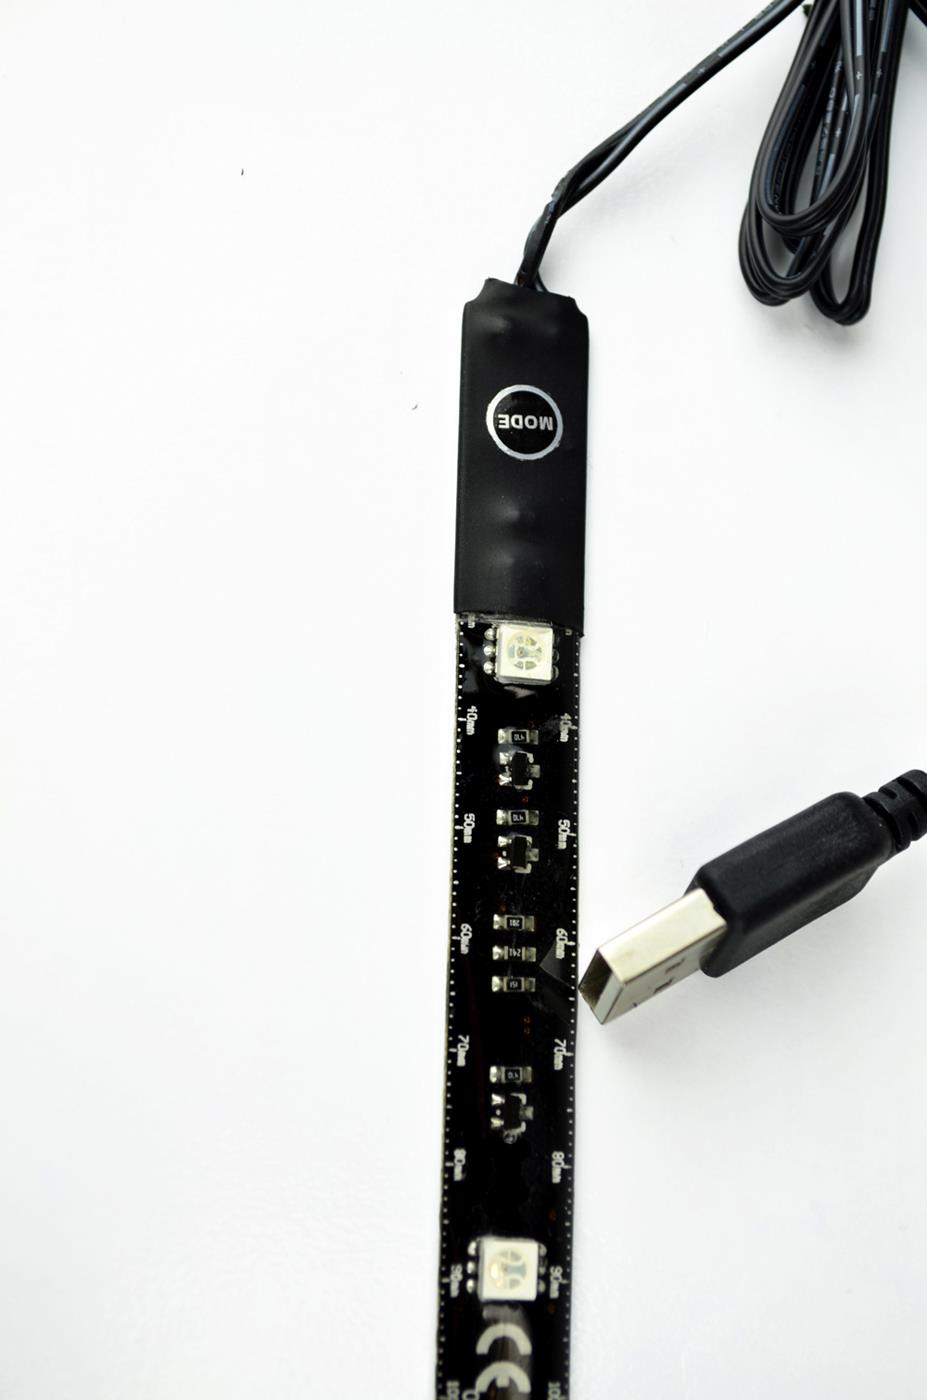 X4-LIFE LED Leiste USB TV Hintergrundbeleuchtung LED Strip Fernseher Beleuchtung